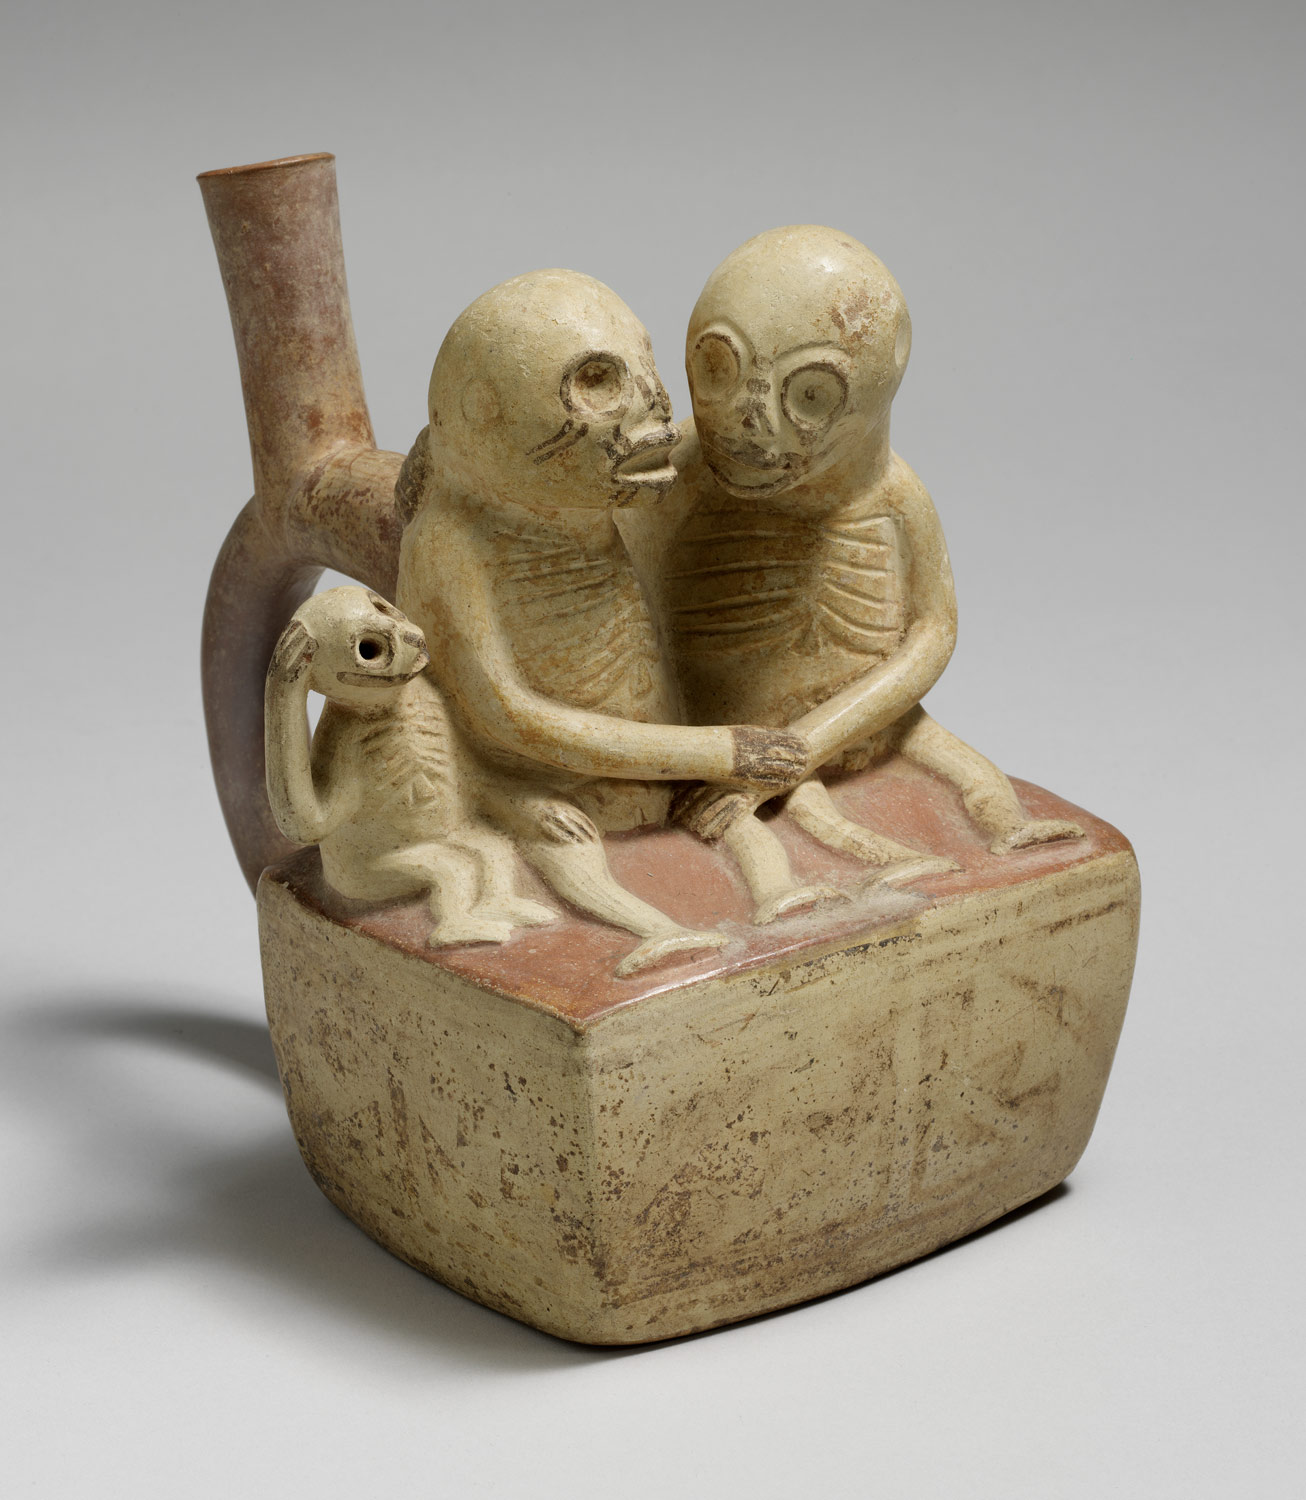 Moche Decorated Ceramics Essay Heilbrunn Timeline Of Art History